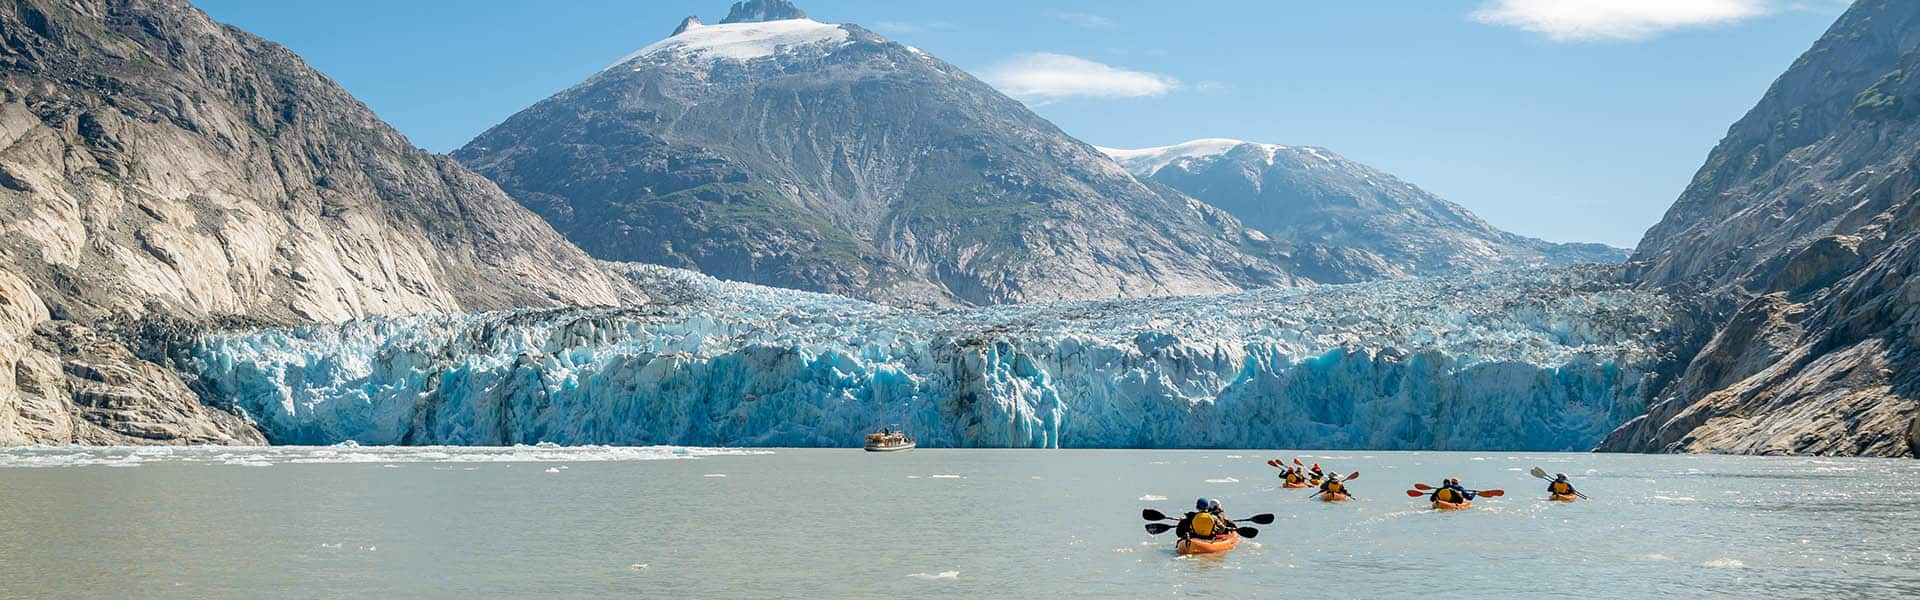 Alasca: Glacier Bay, Skagway & Juneau